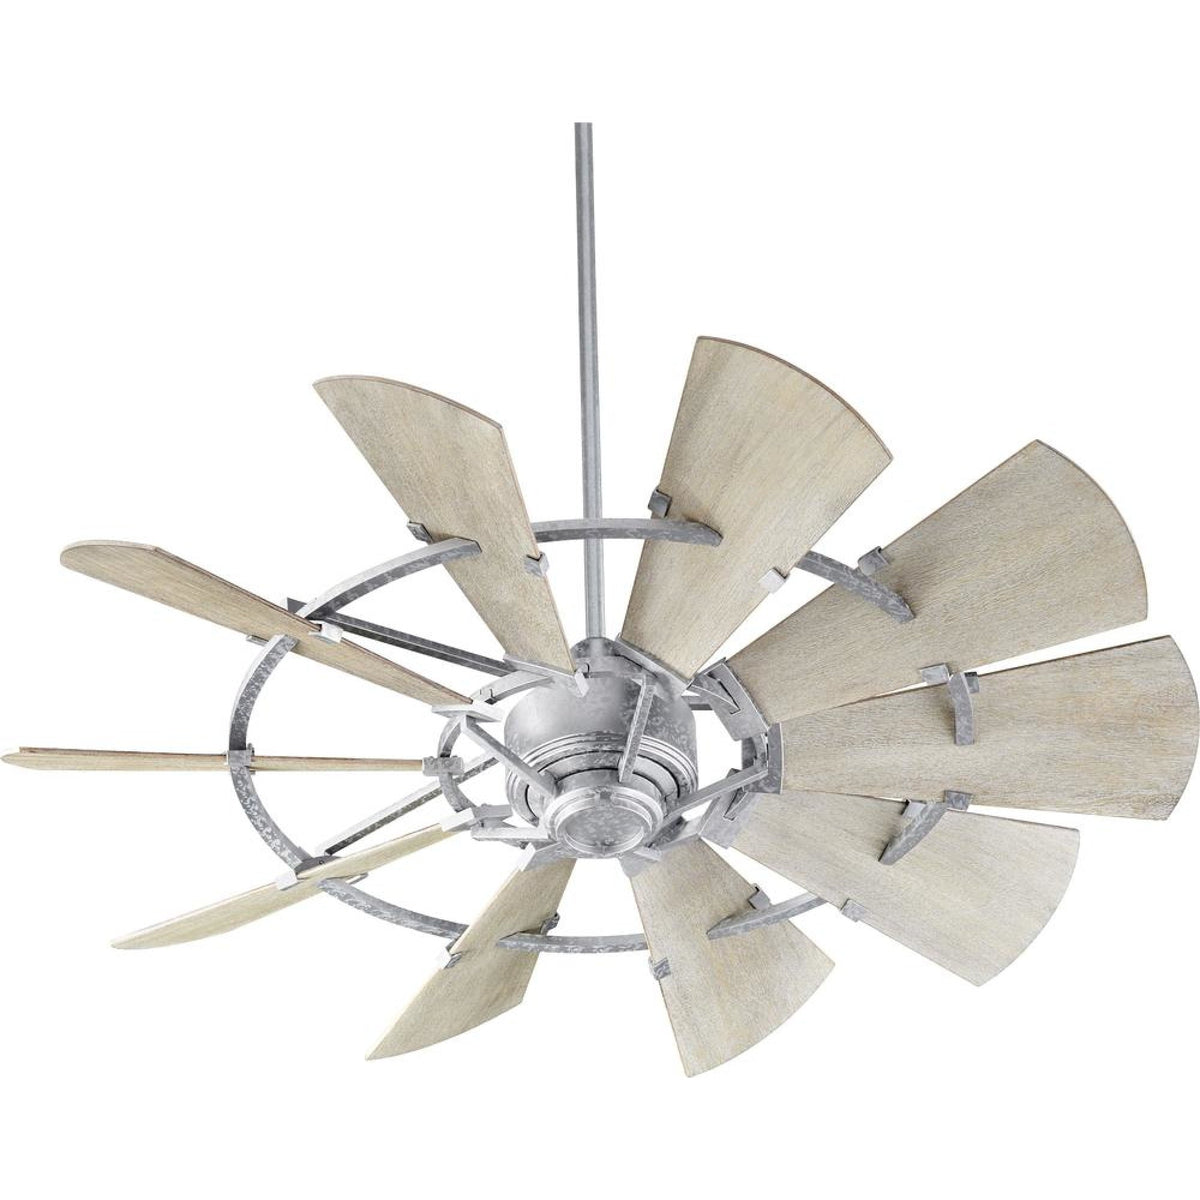 Quorum Windmill Ceiling Fan - Galvanized - Outdoor 195210-9 52 inch Coastal Lighting